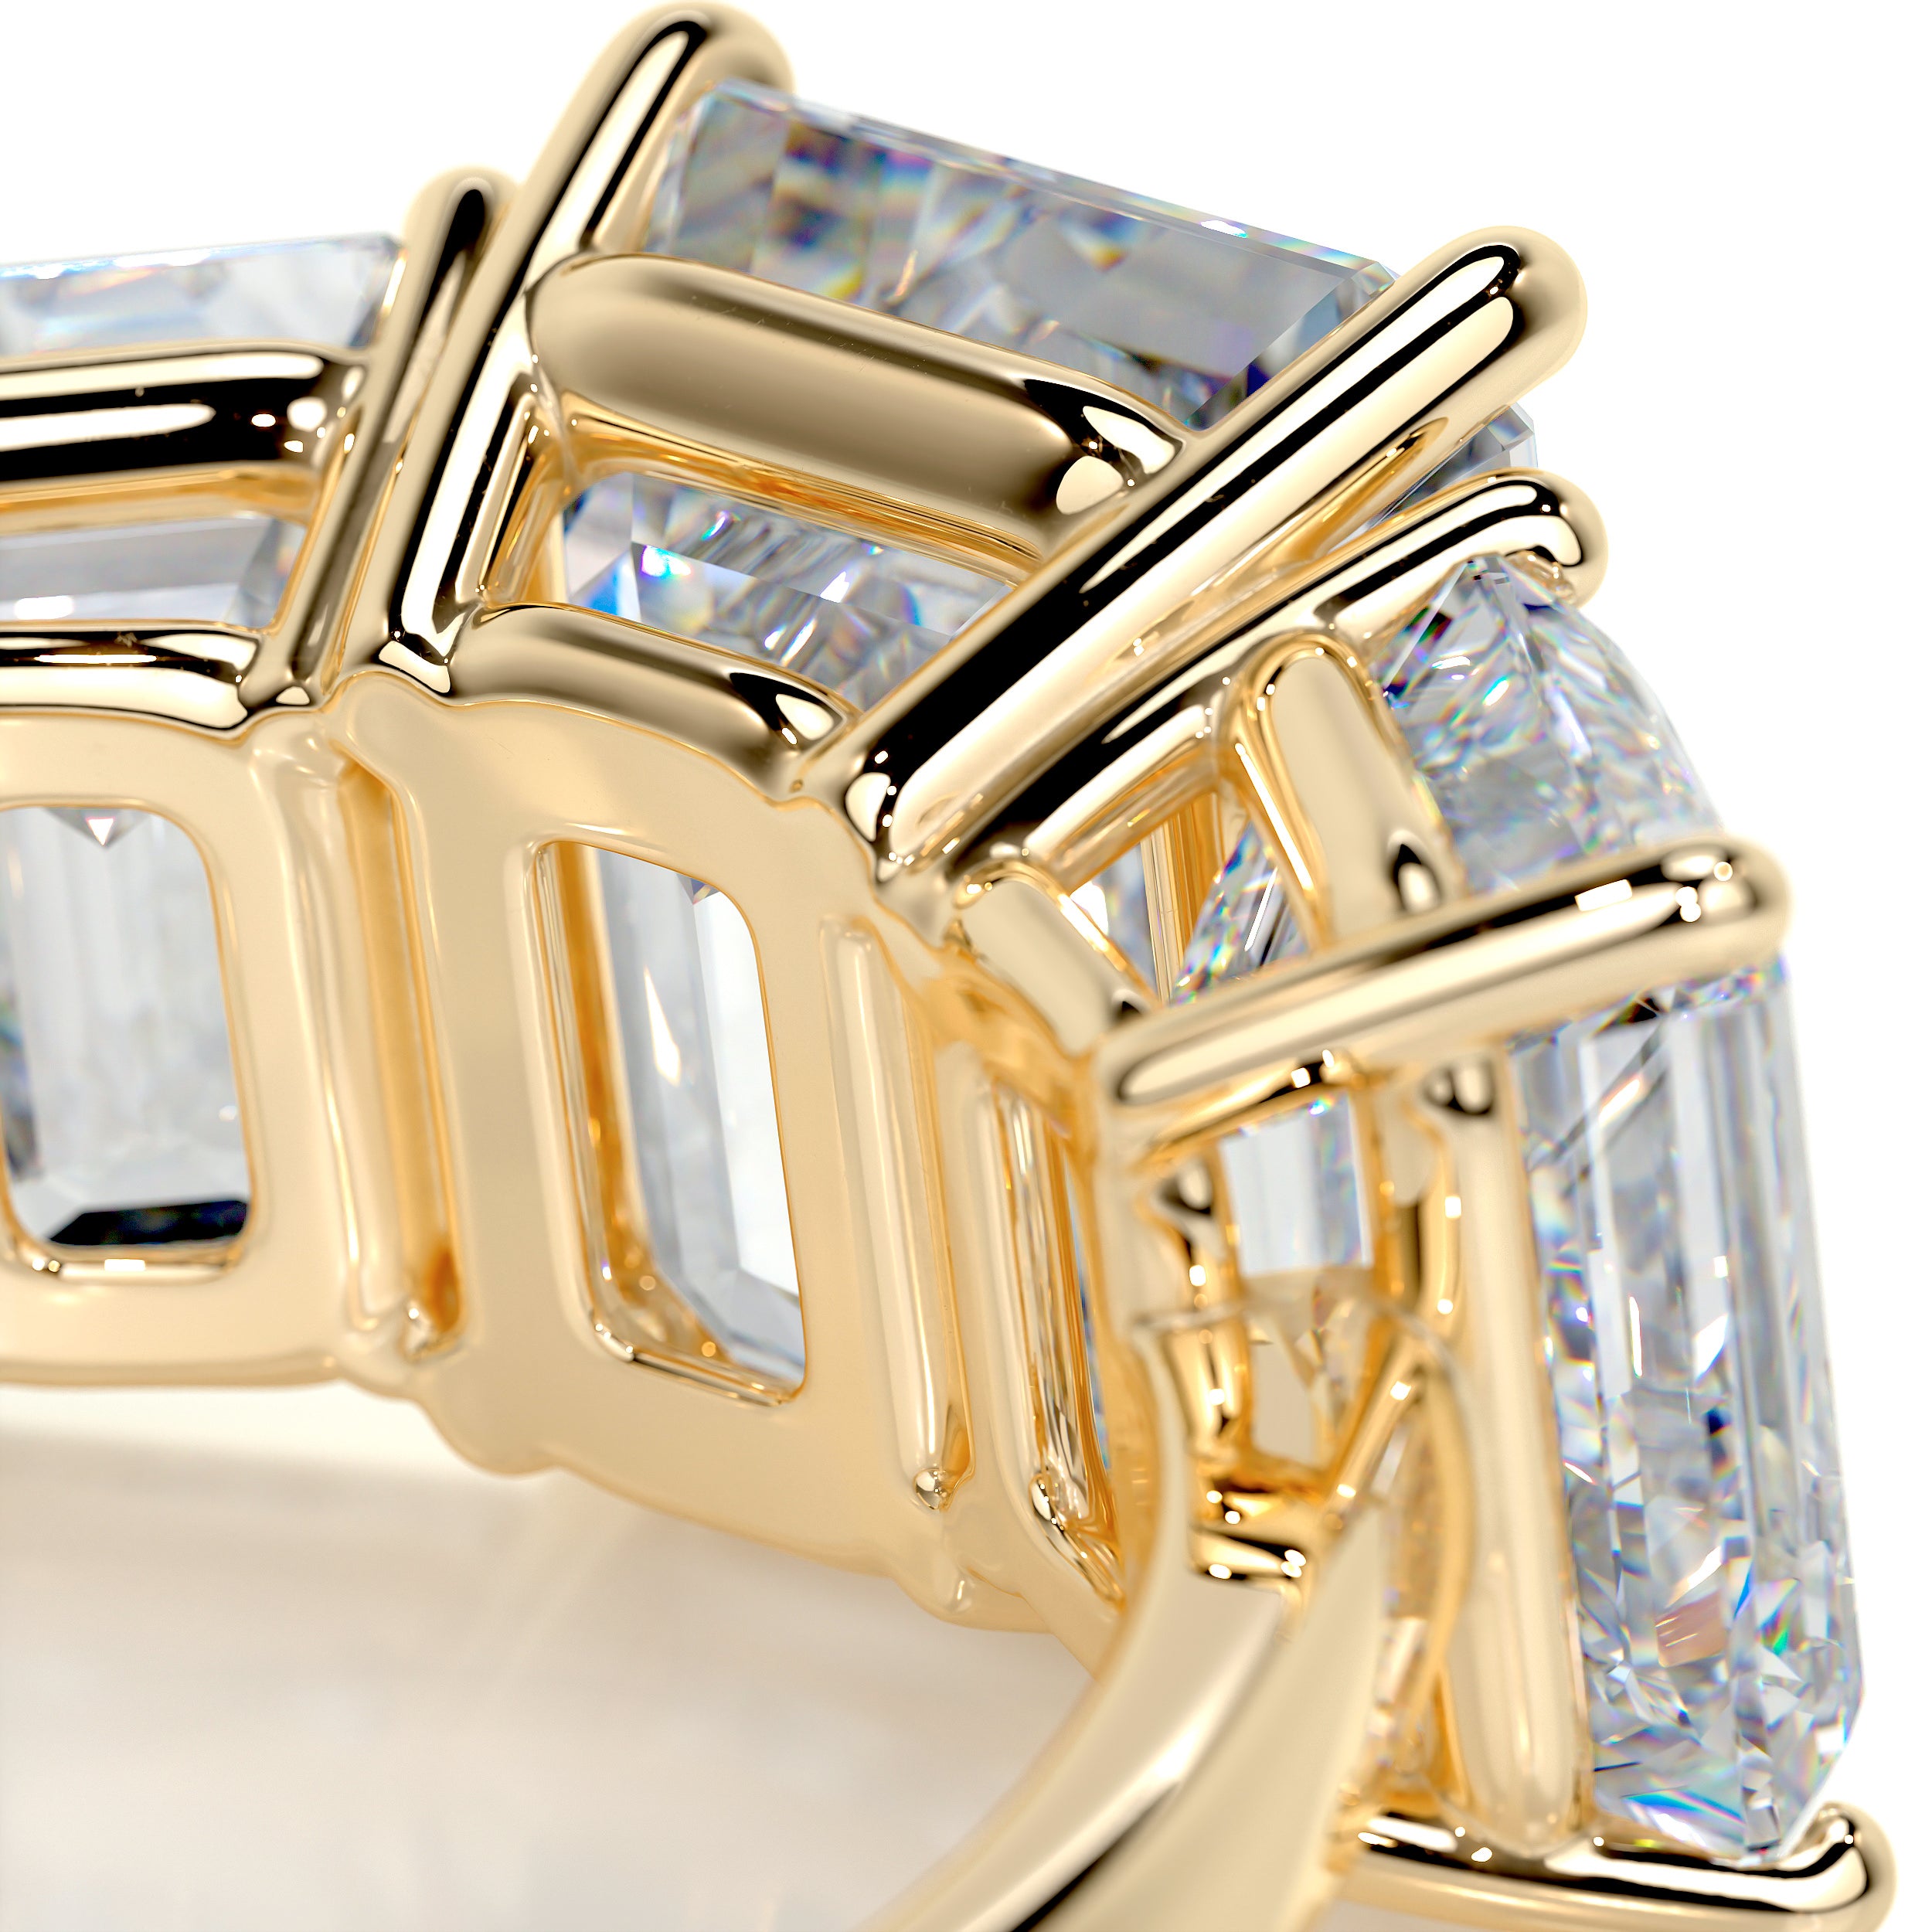 Amanda Diamond Engagement Ring -18K Yellow Gold